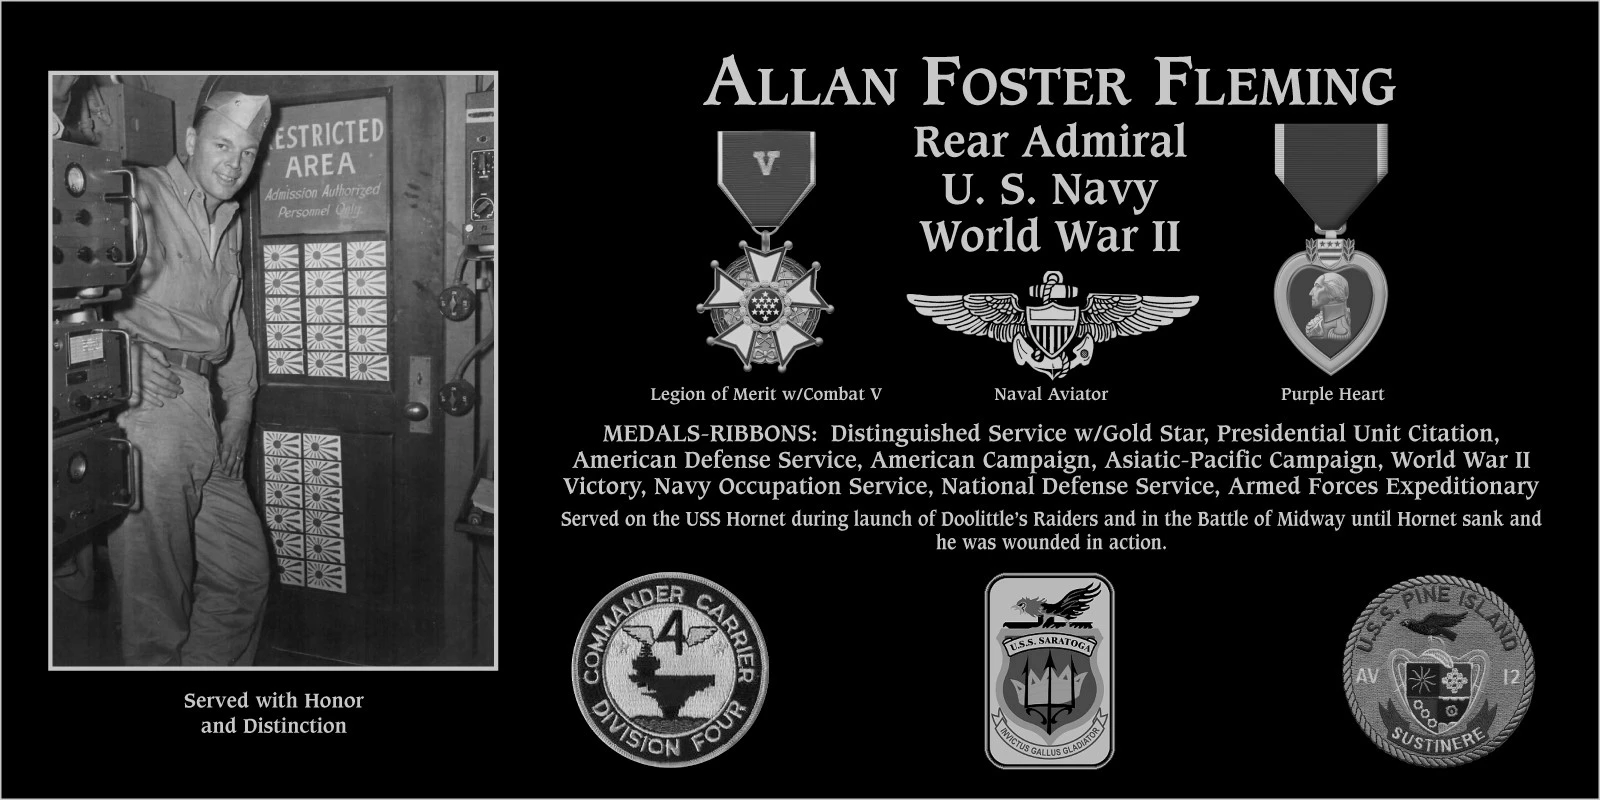 Allan Foster Fleming, sr